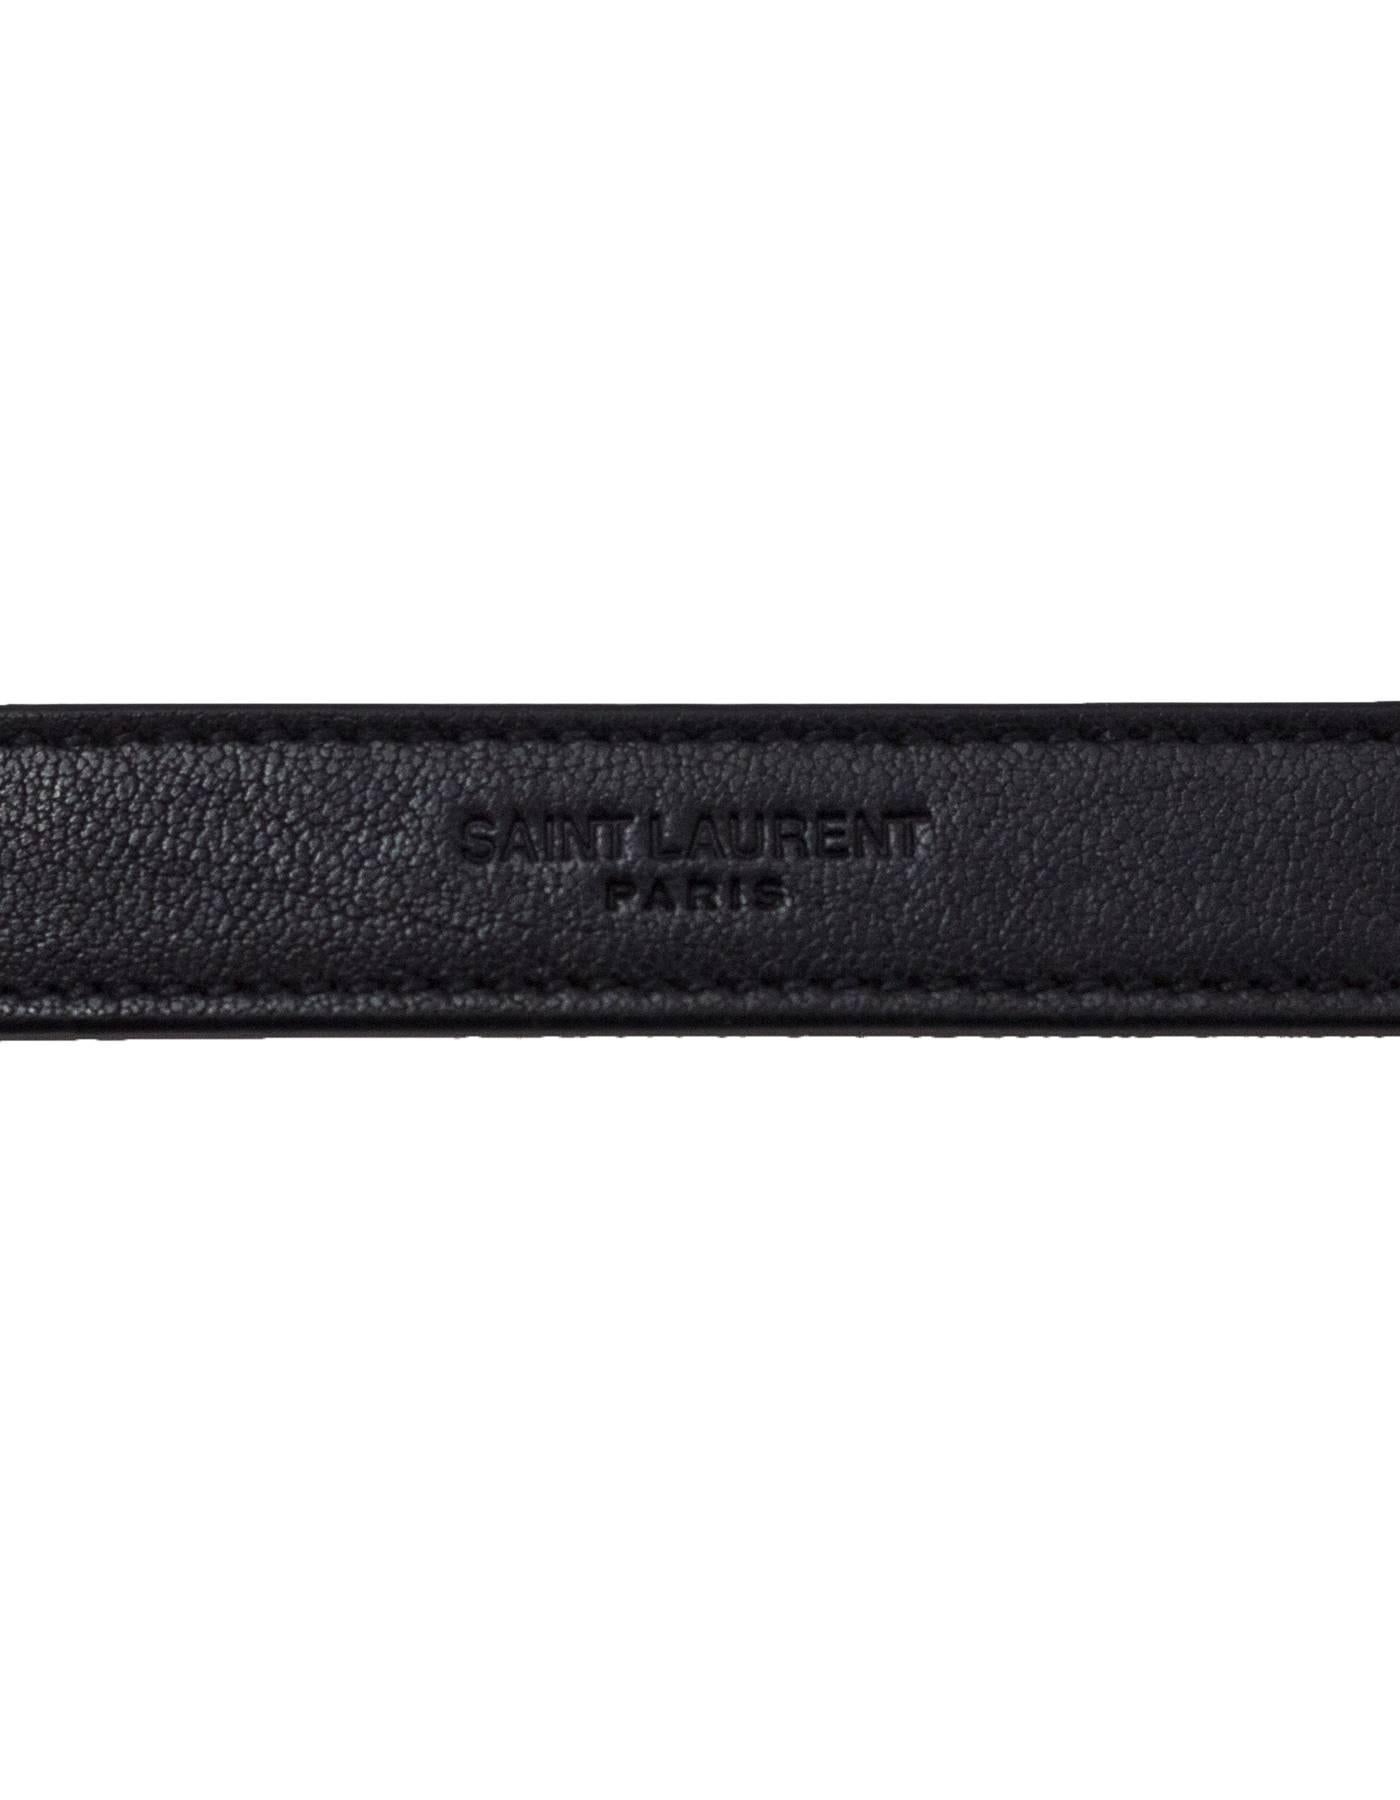 Saint Laurent Black Suede Macrame Monogram Slouchy Chain Medium Shoulder Bag 1